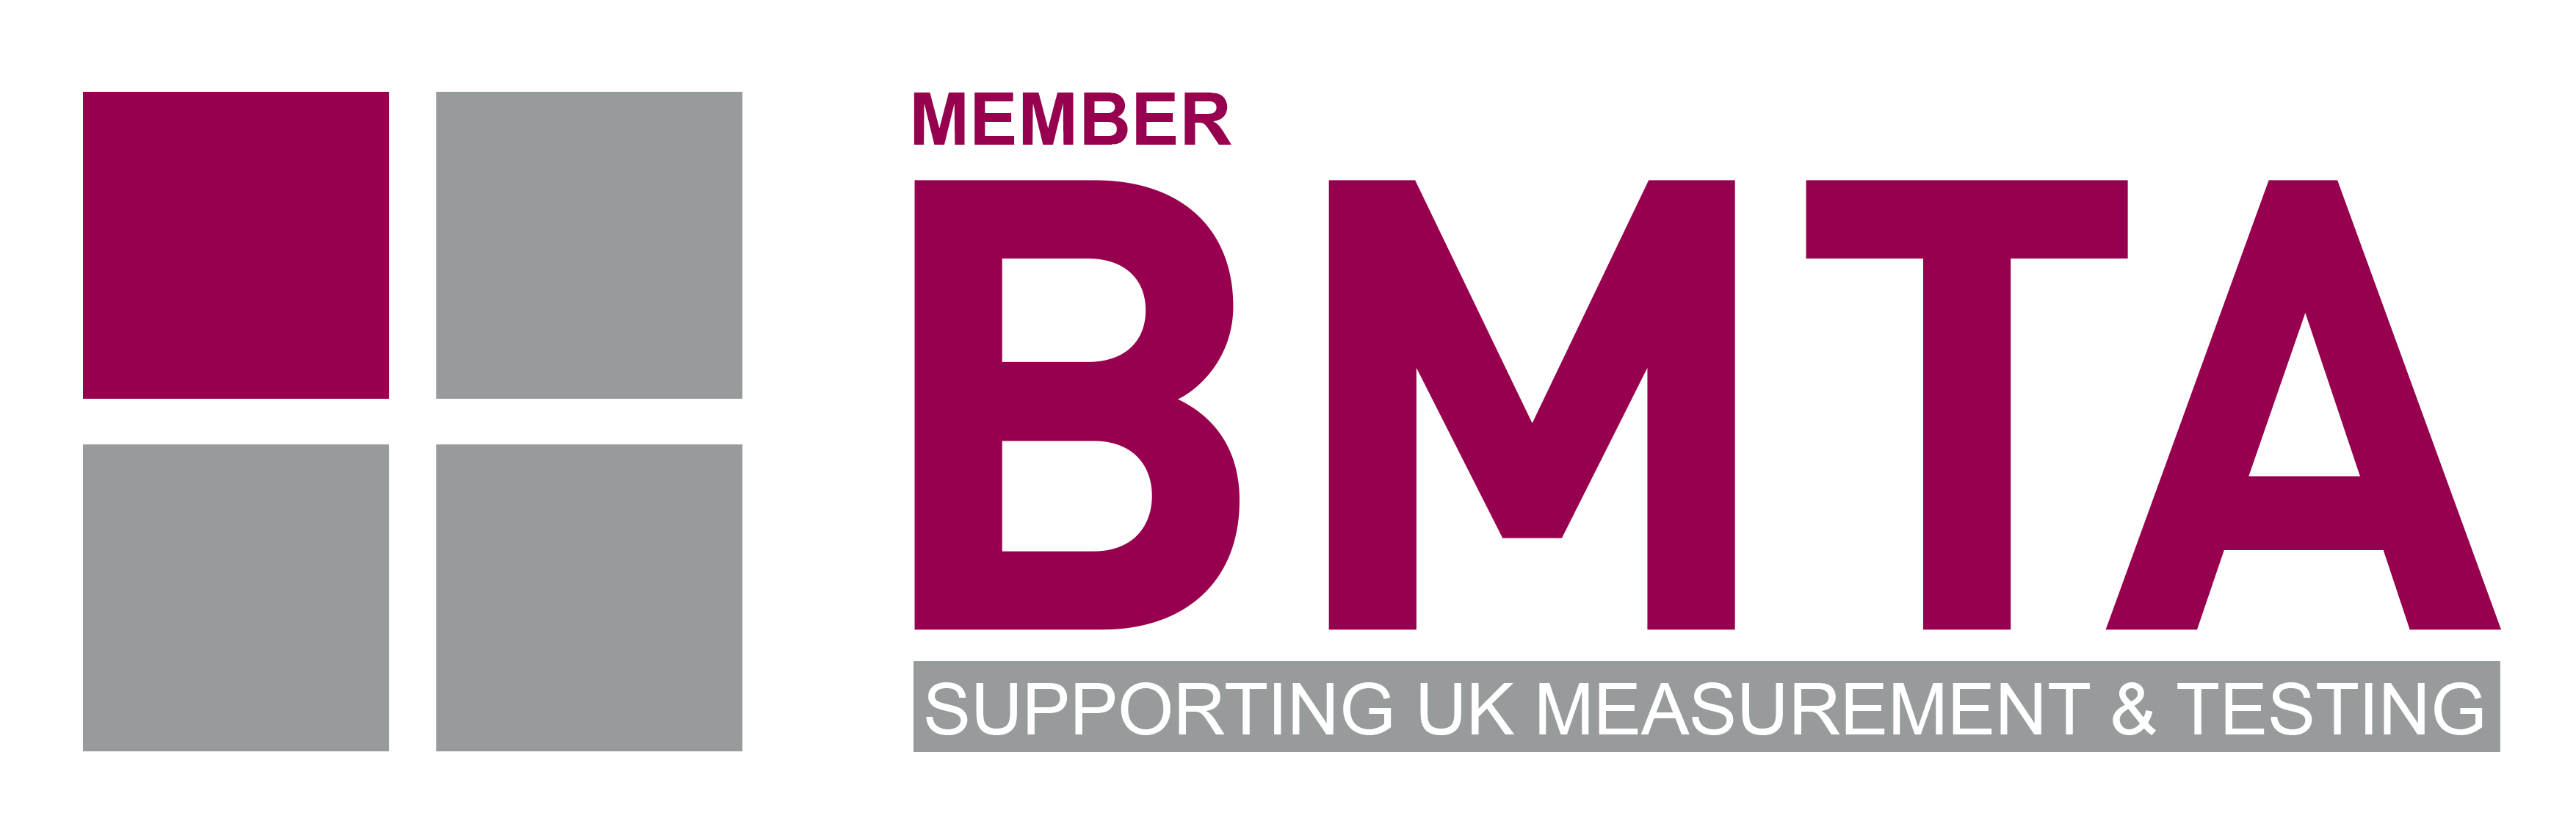 BMTA Member Logo